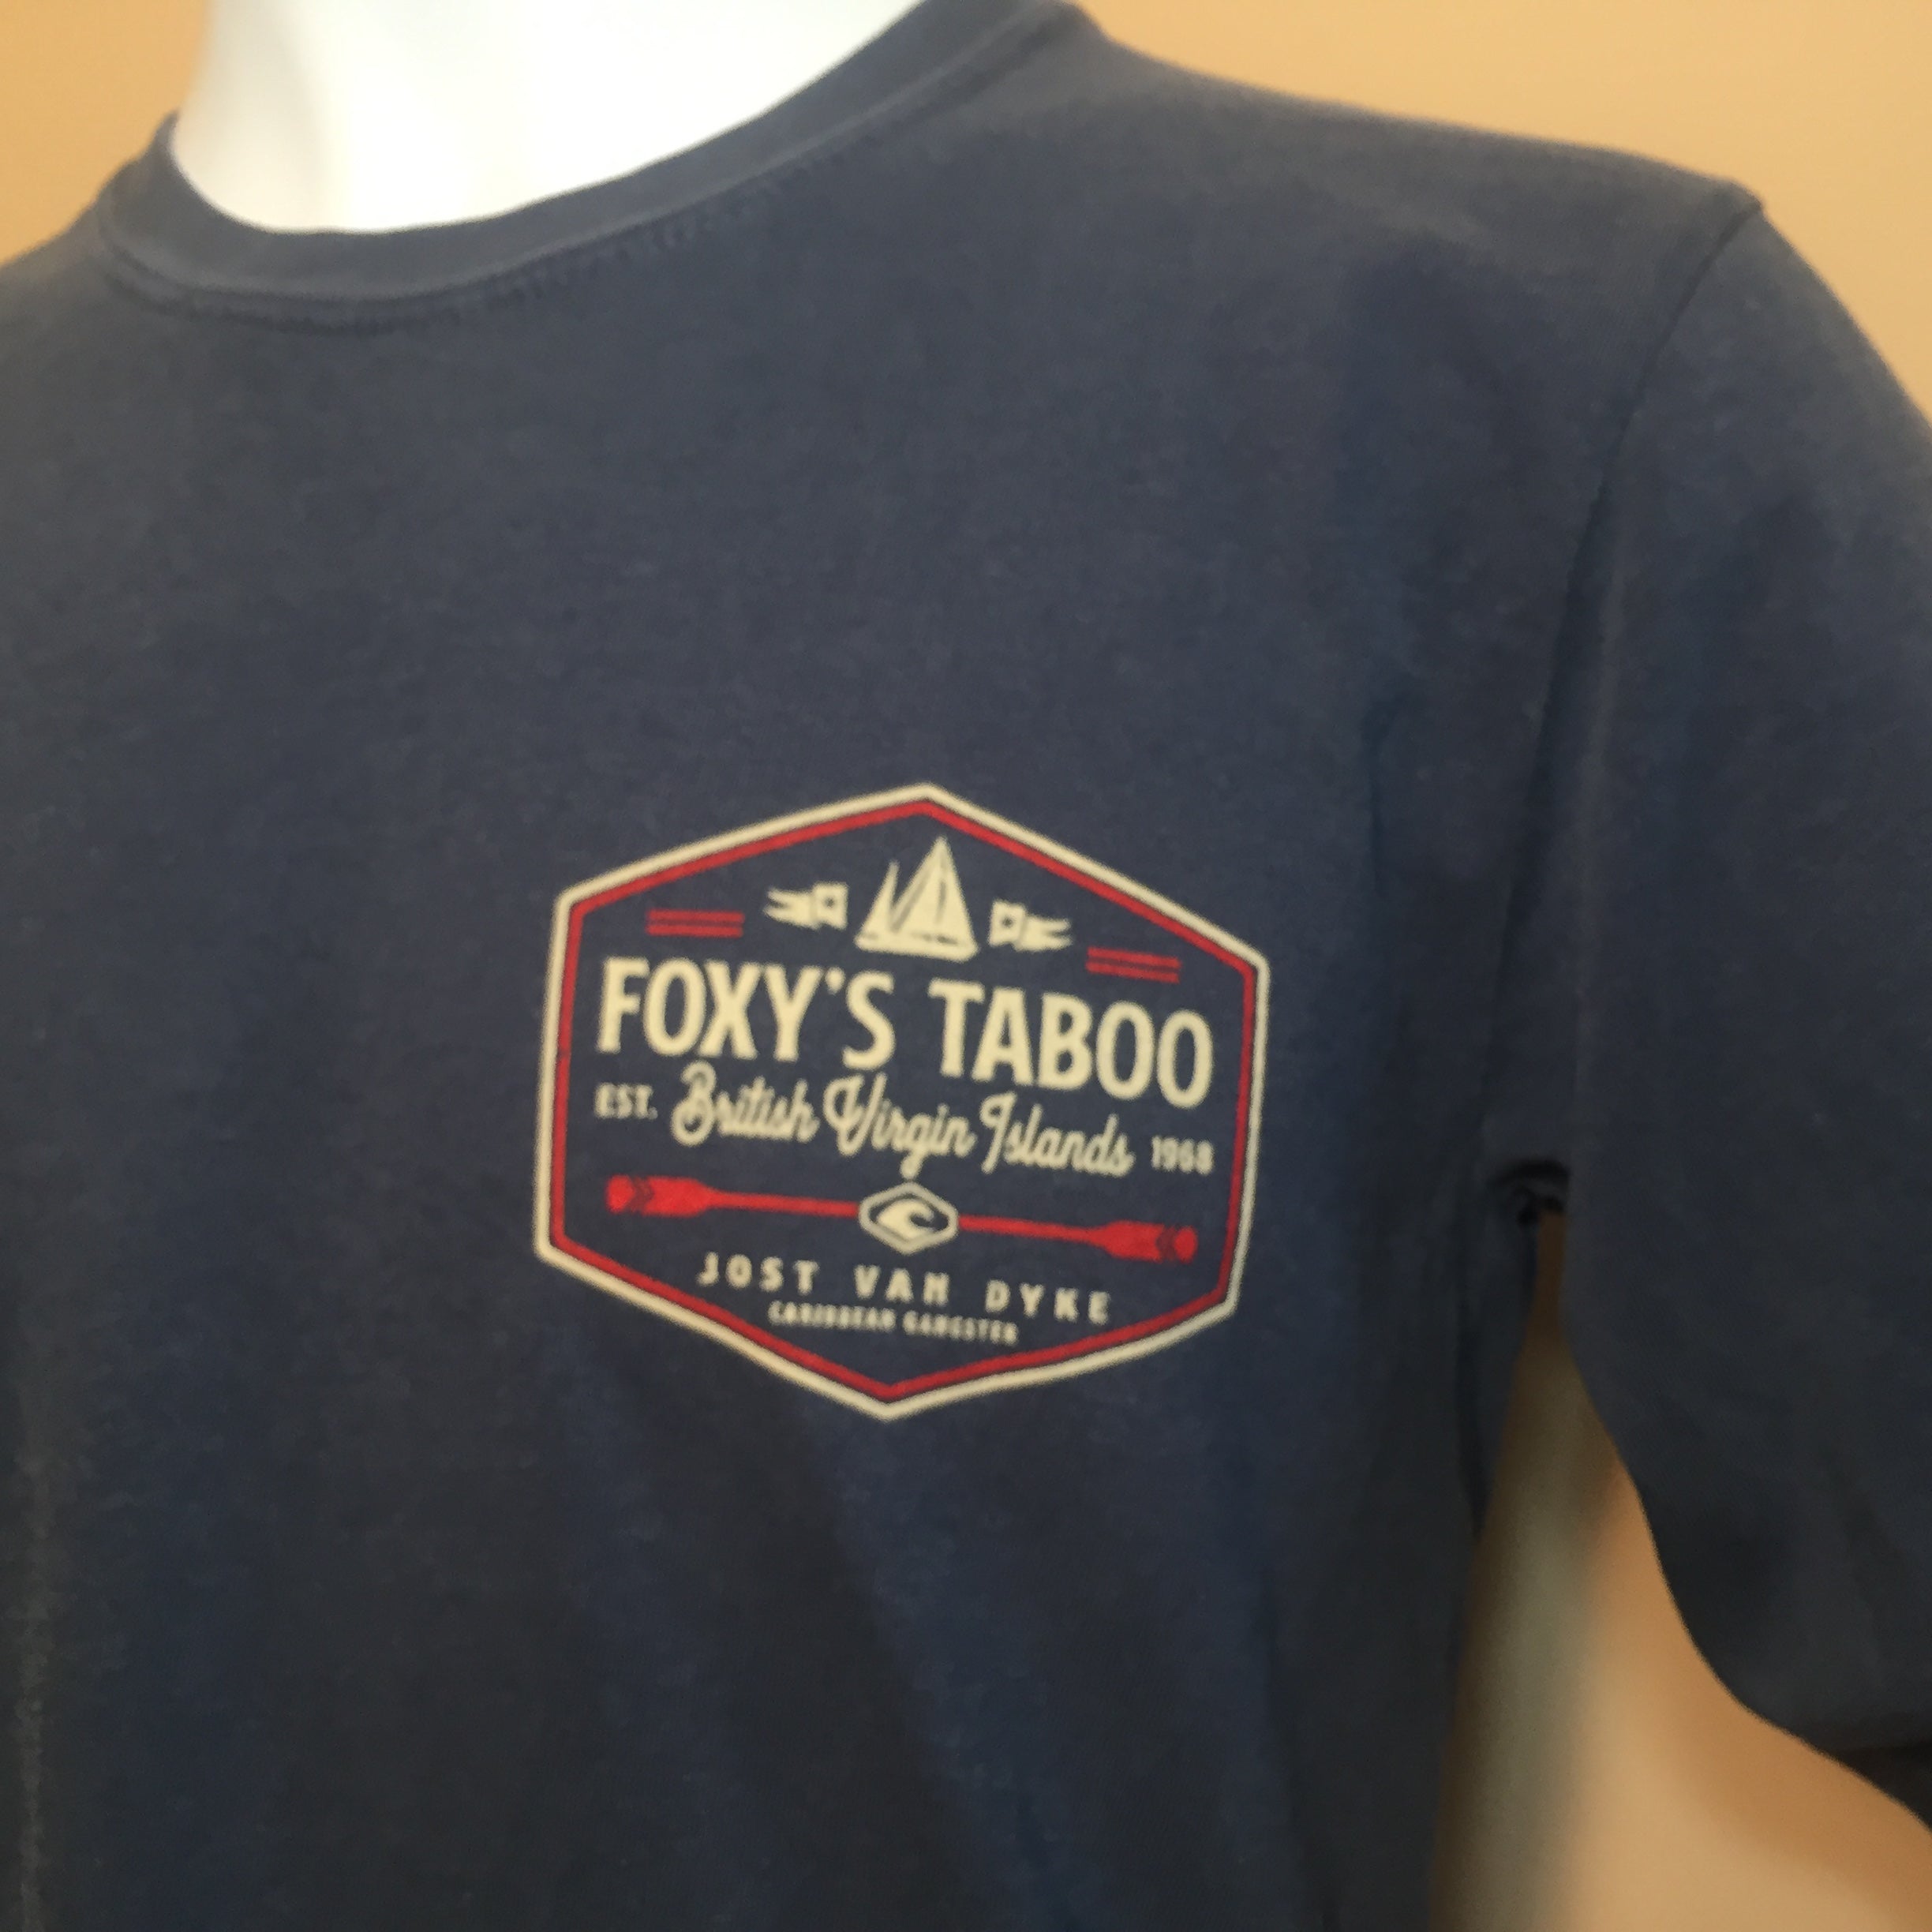 Foxy's 'Taboo Star Sail' Long Sleeve Tee